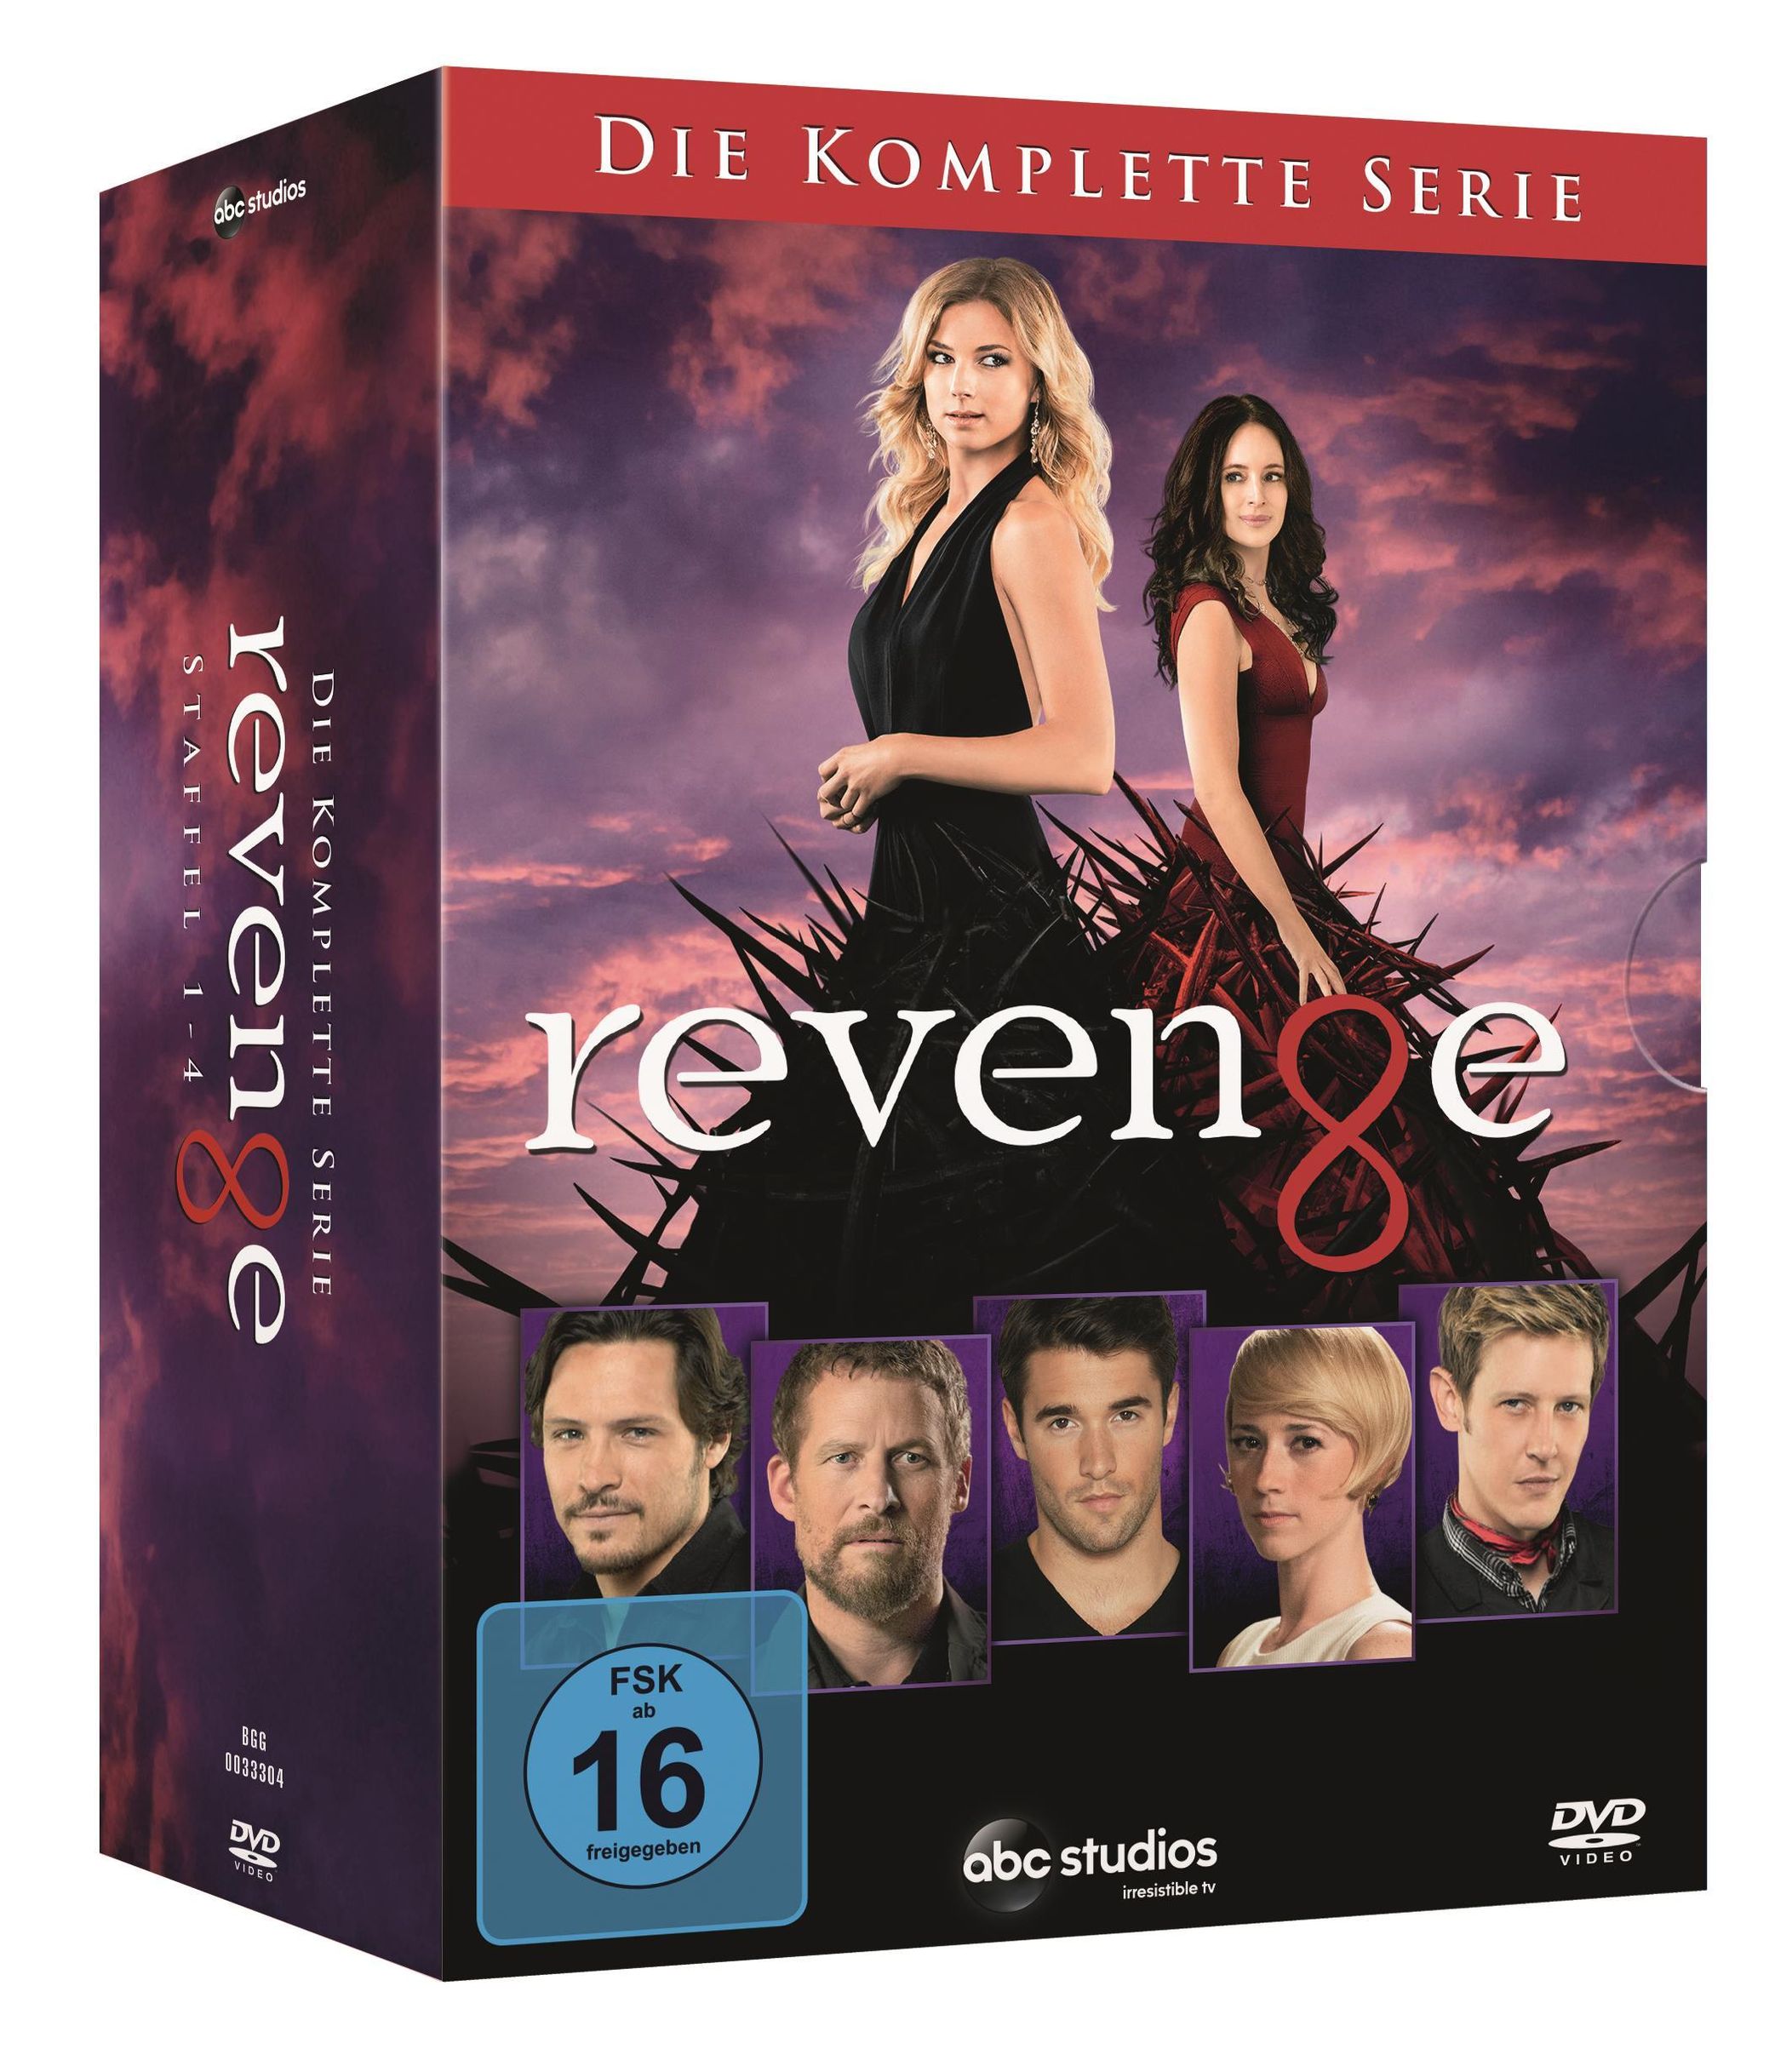 Revenge - Die komplette Serie DVD bei Weltbild.de bestellen